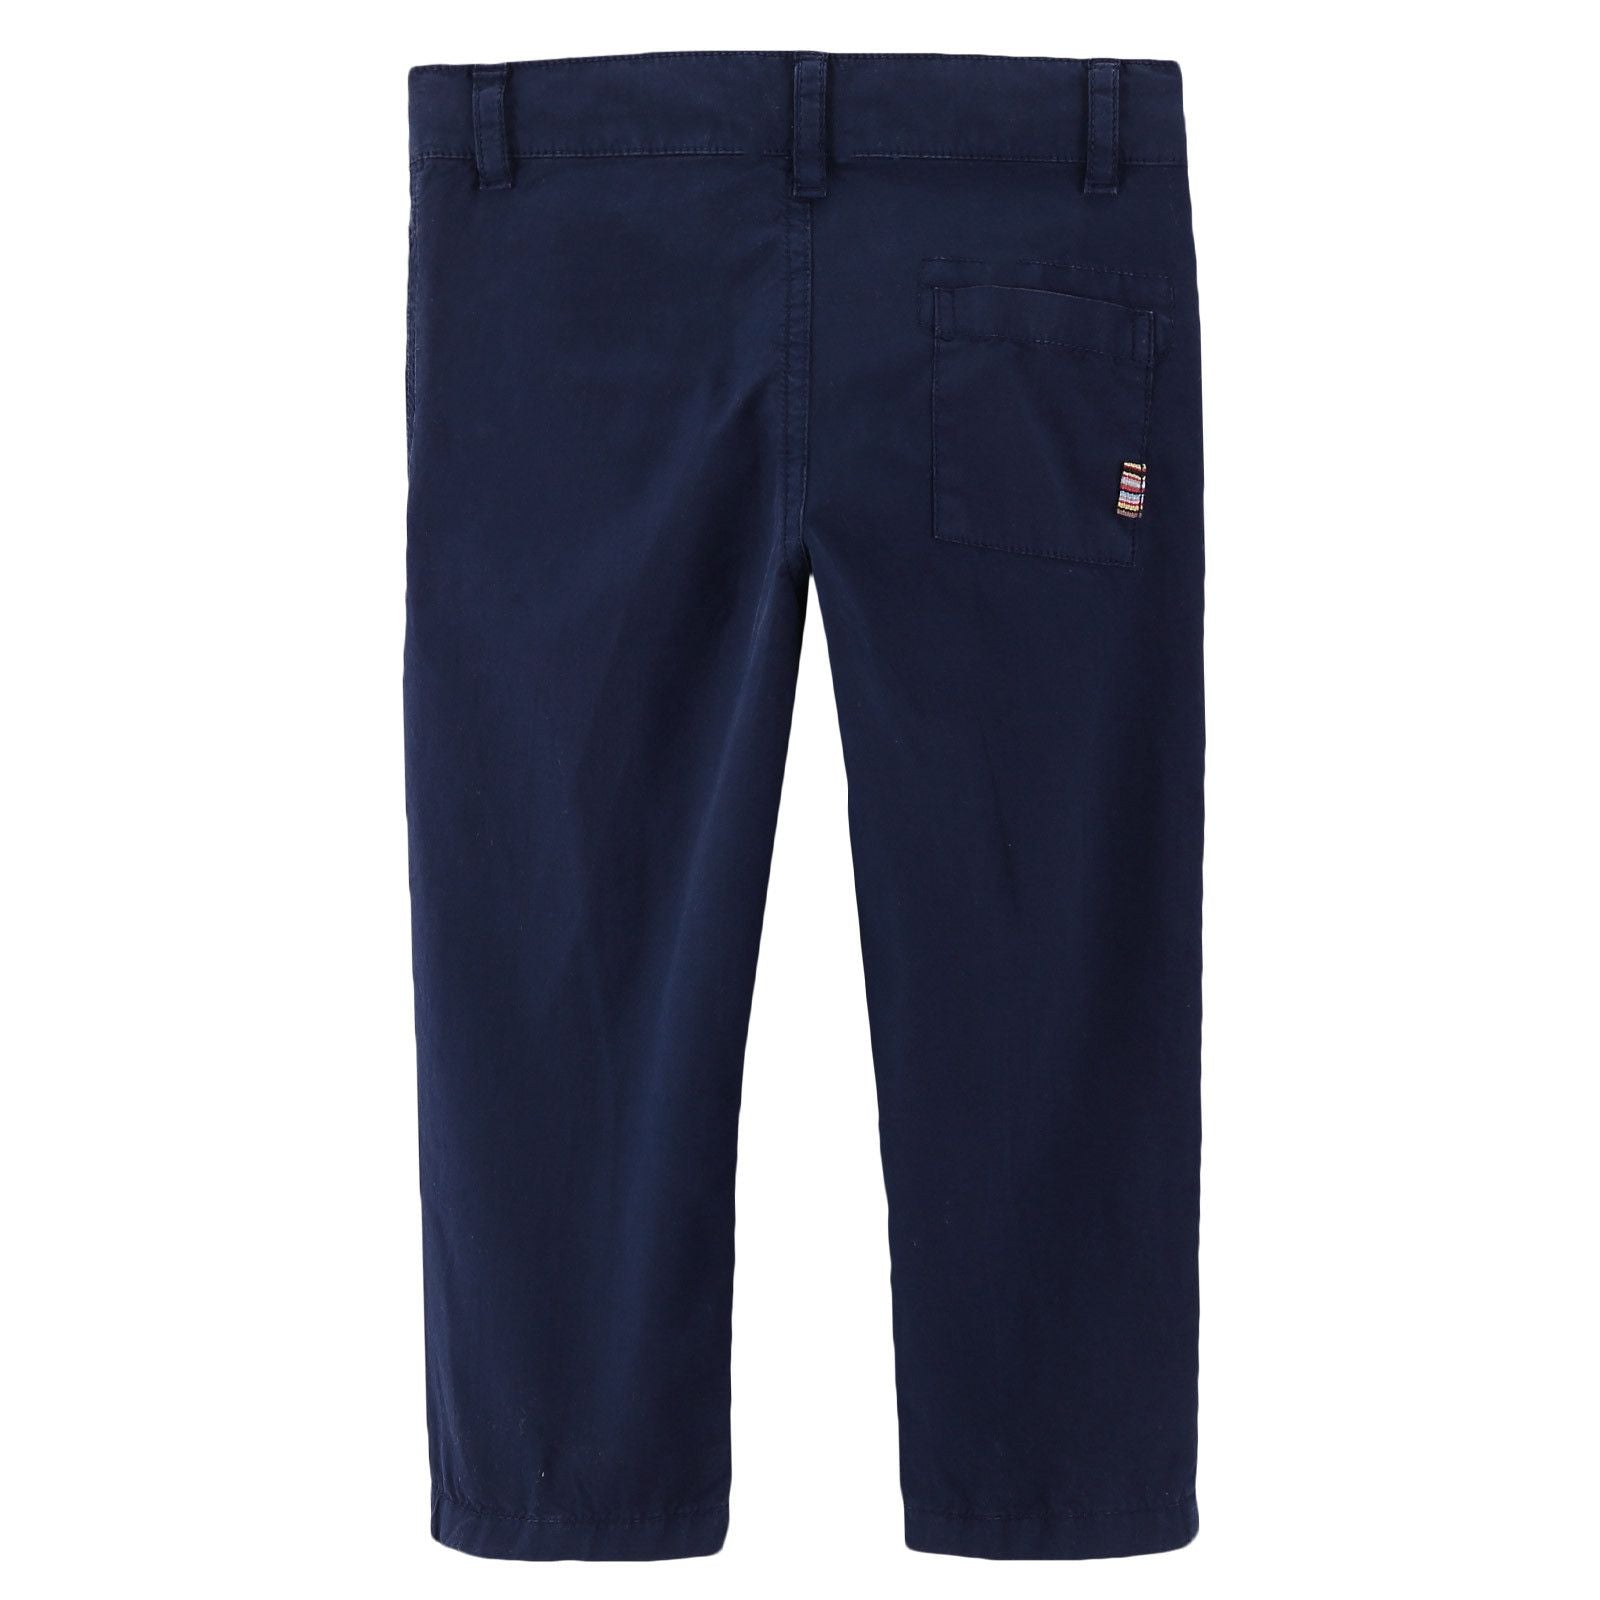 Boys Navy Blue Cotton Straight Cut Style Trousers - CÉMAROSE | Children's Fashion Store - 2